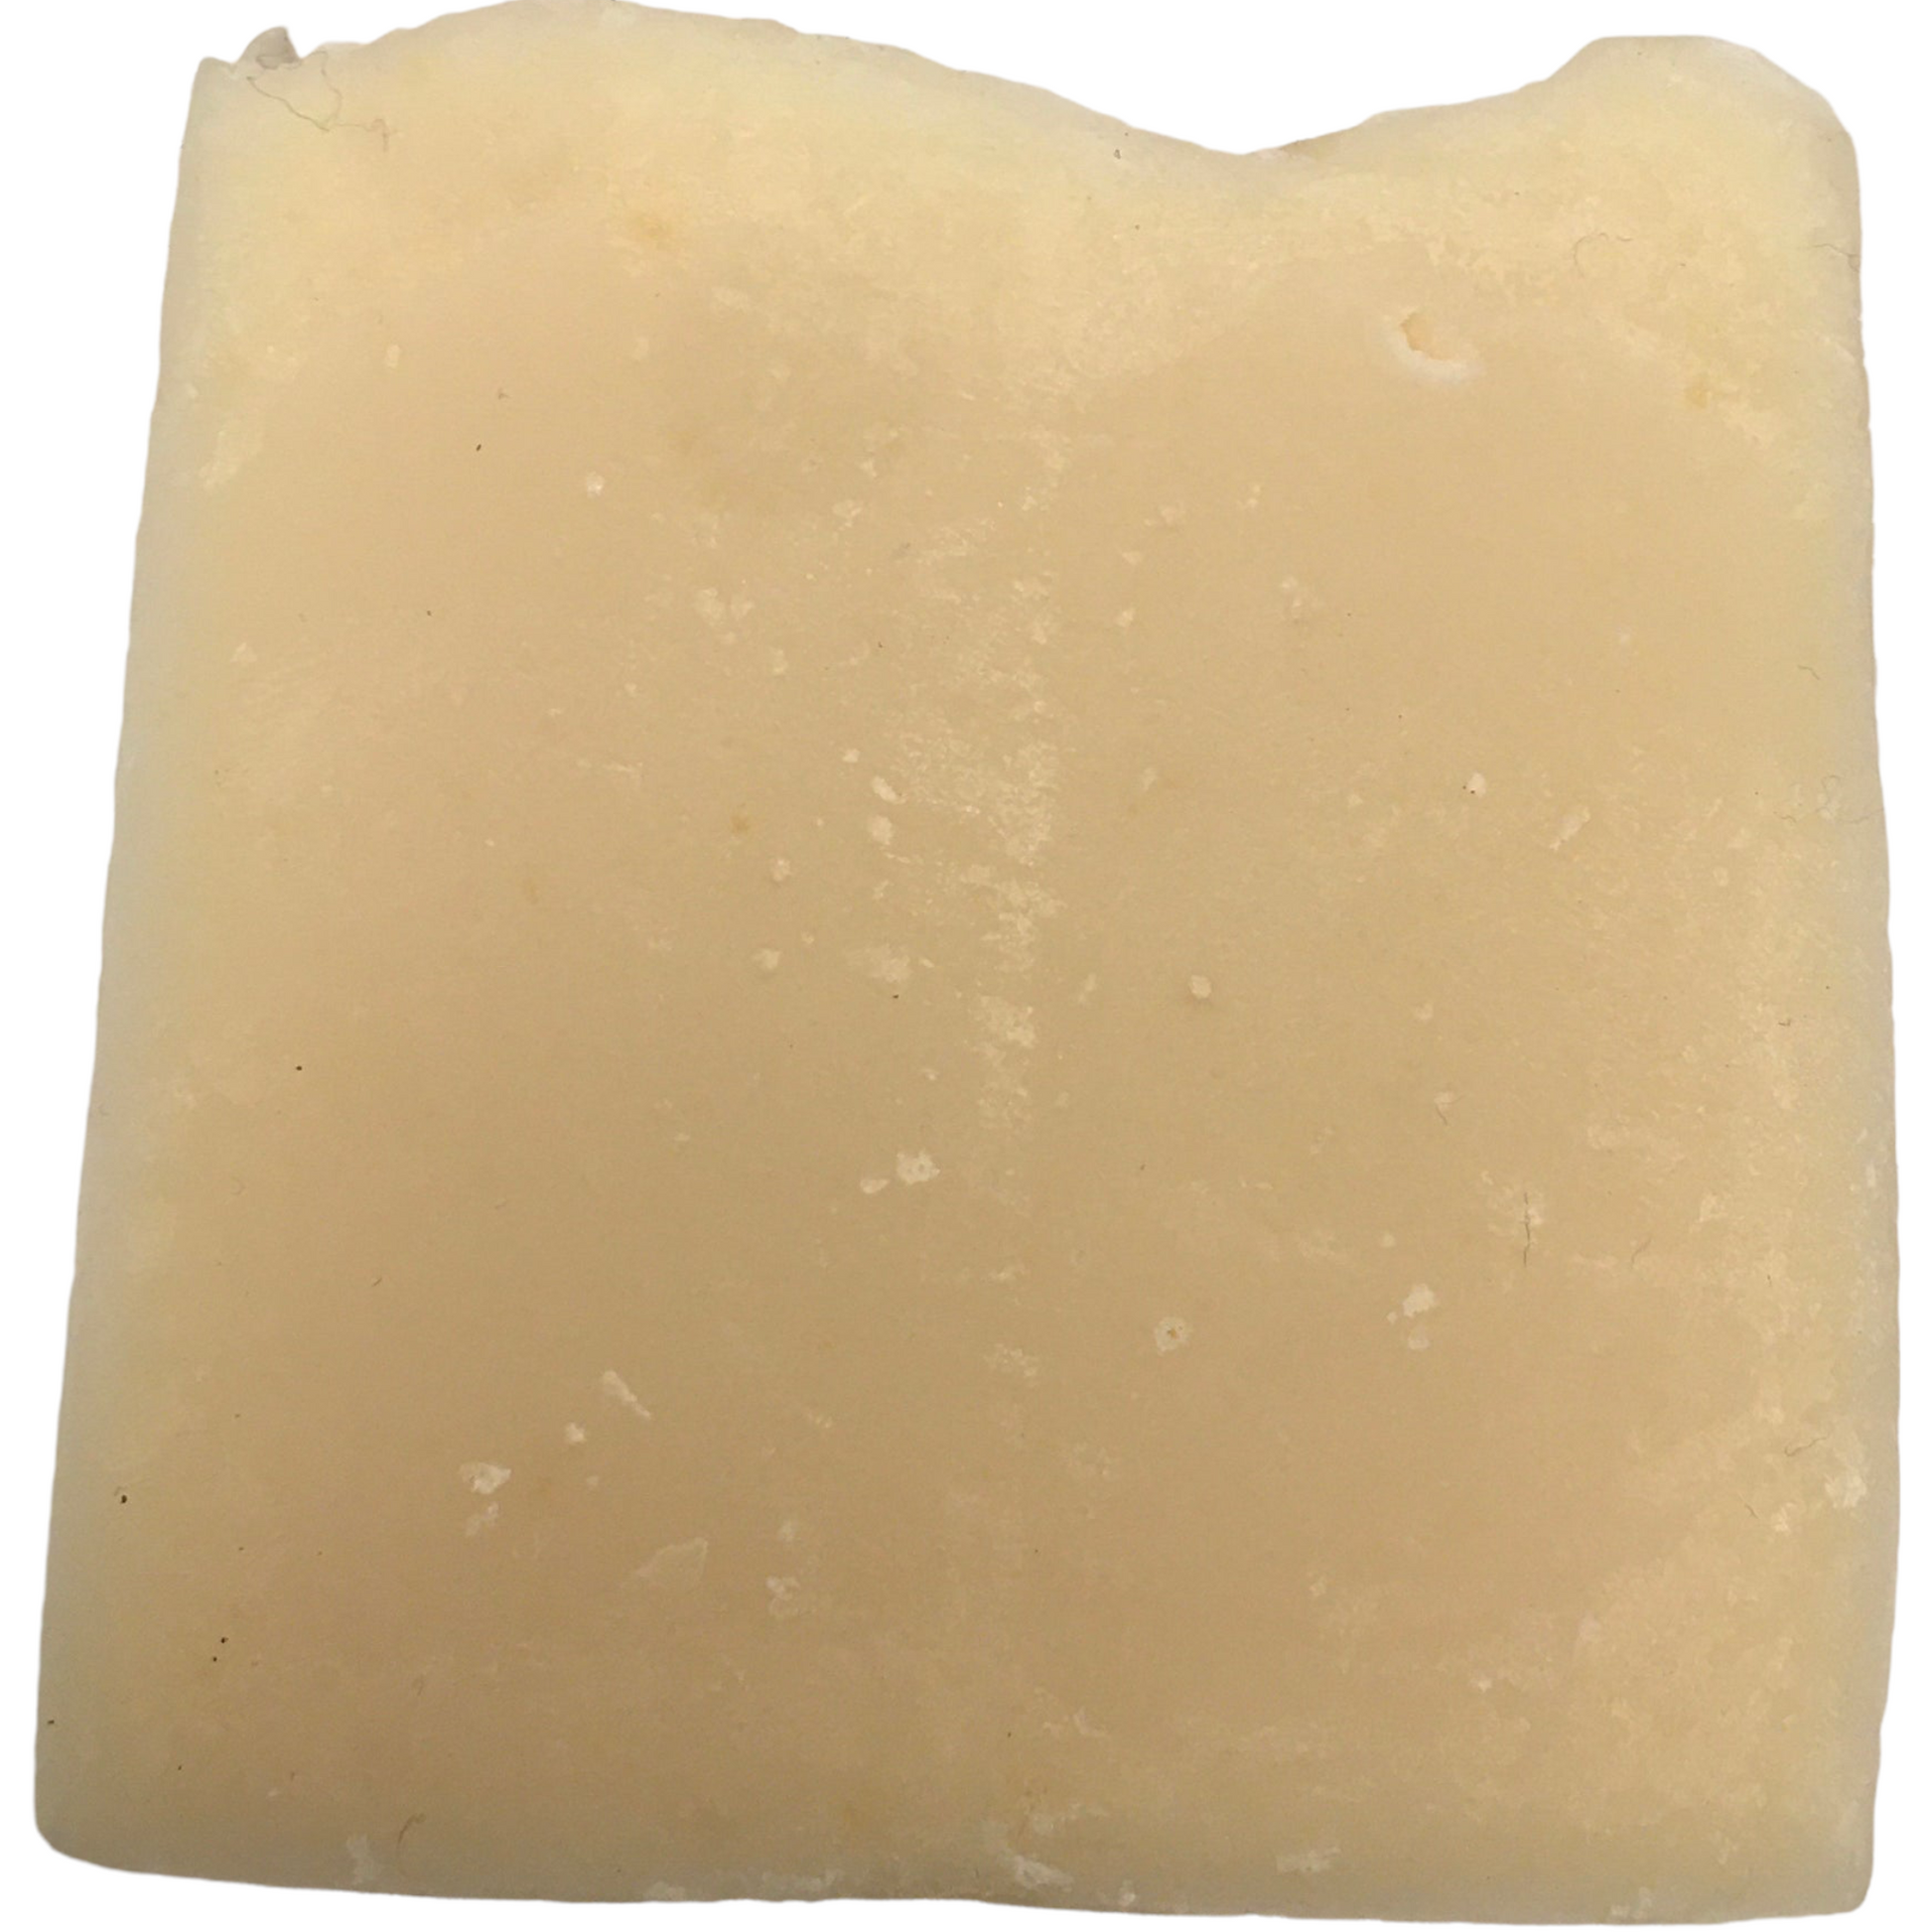 bar of goat milk soap